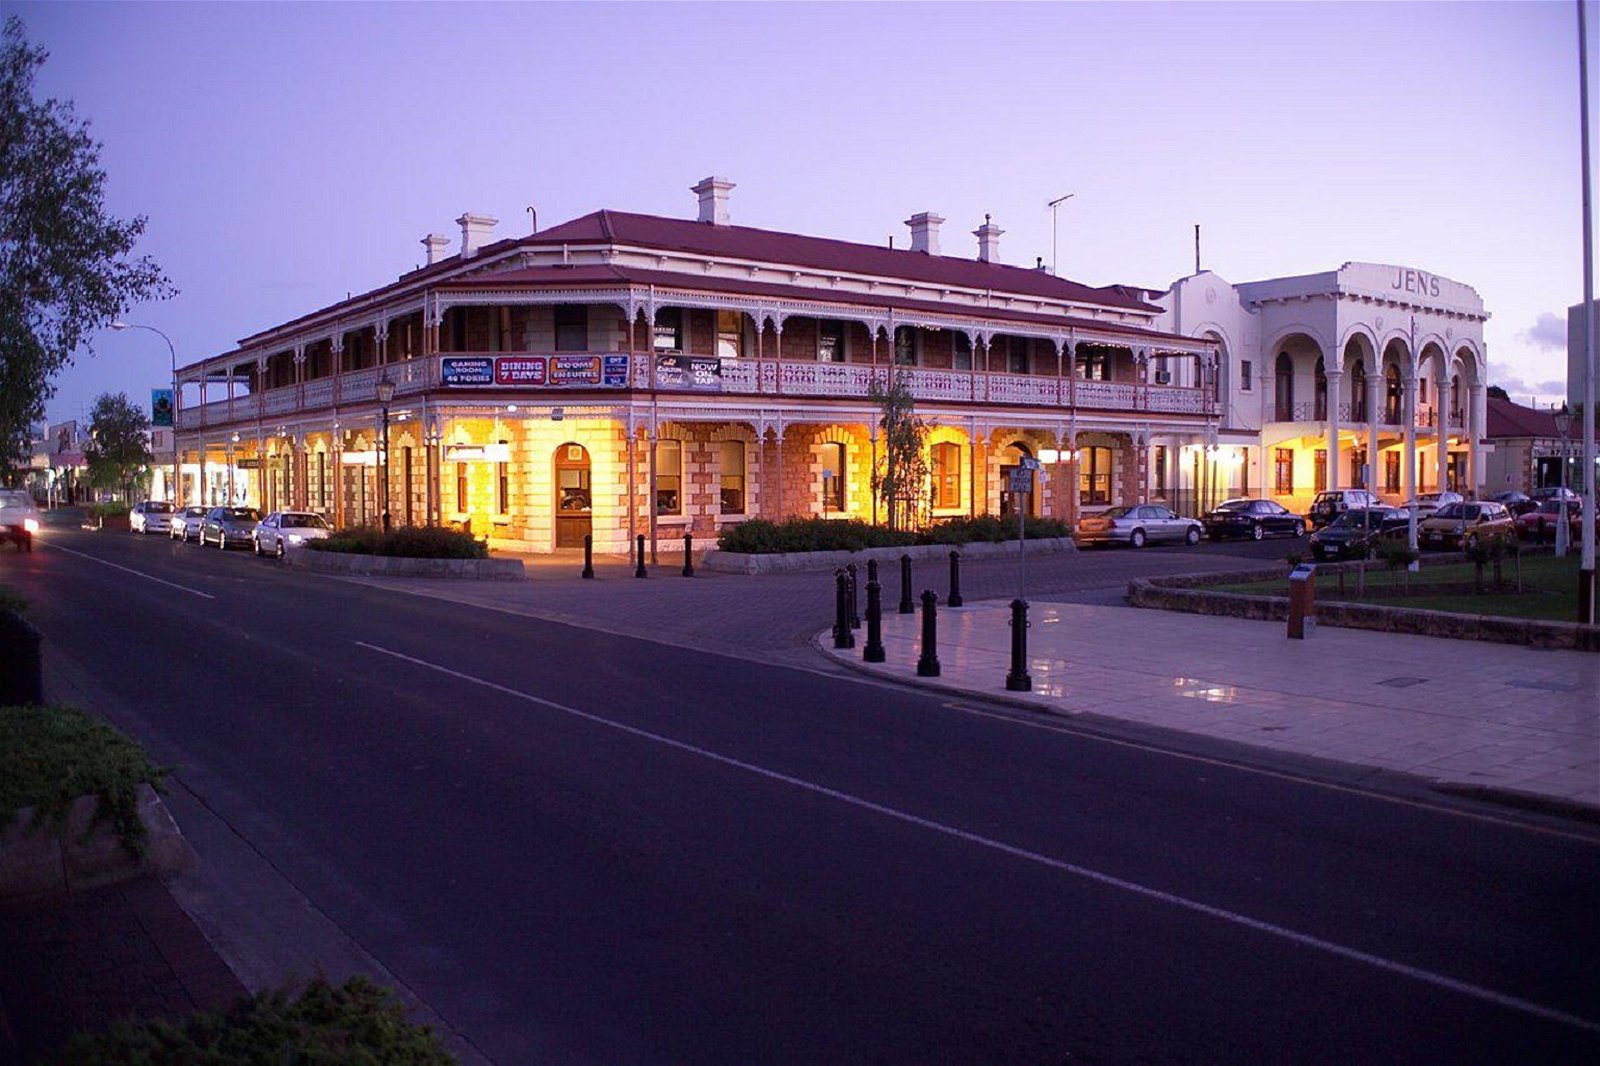 Jens Town Hall Hotel - Australia Accommodation